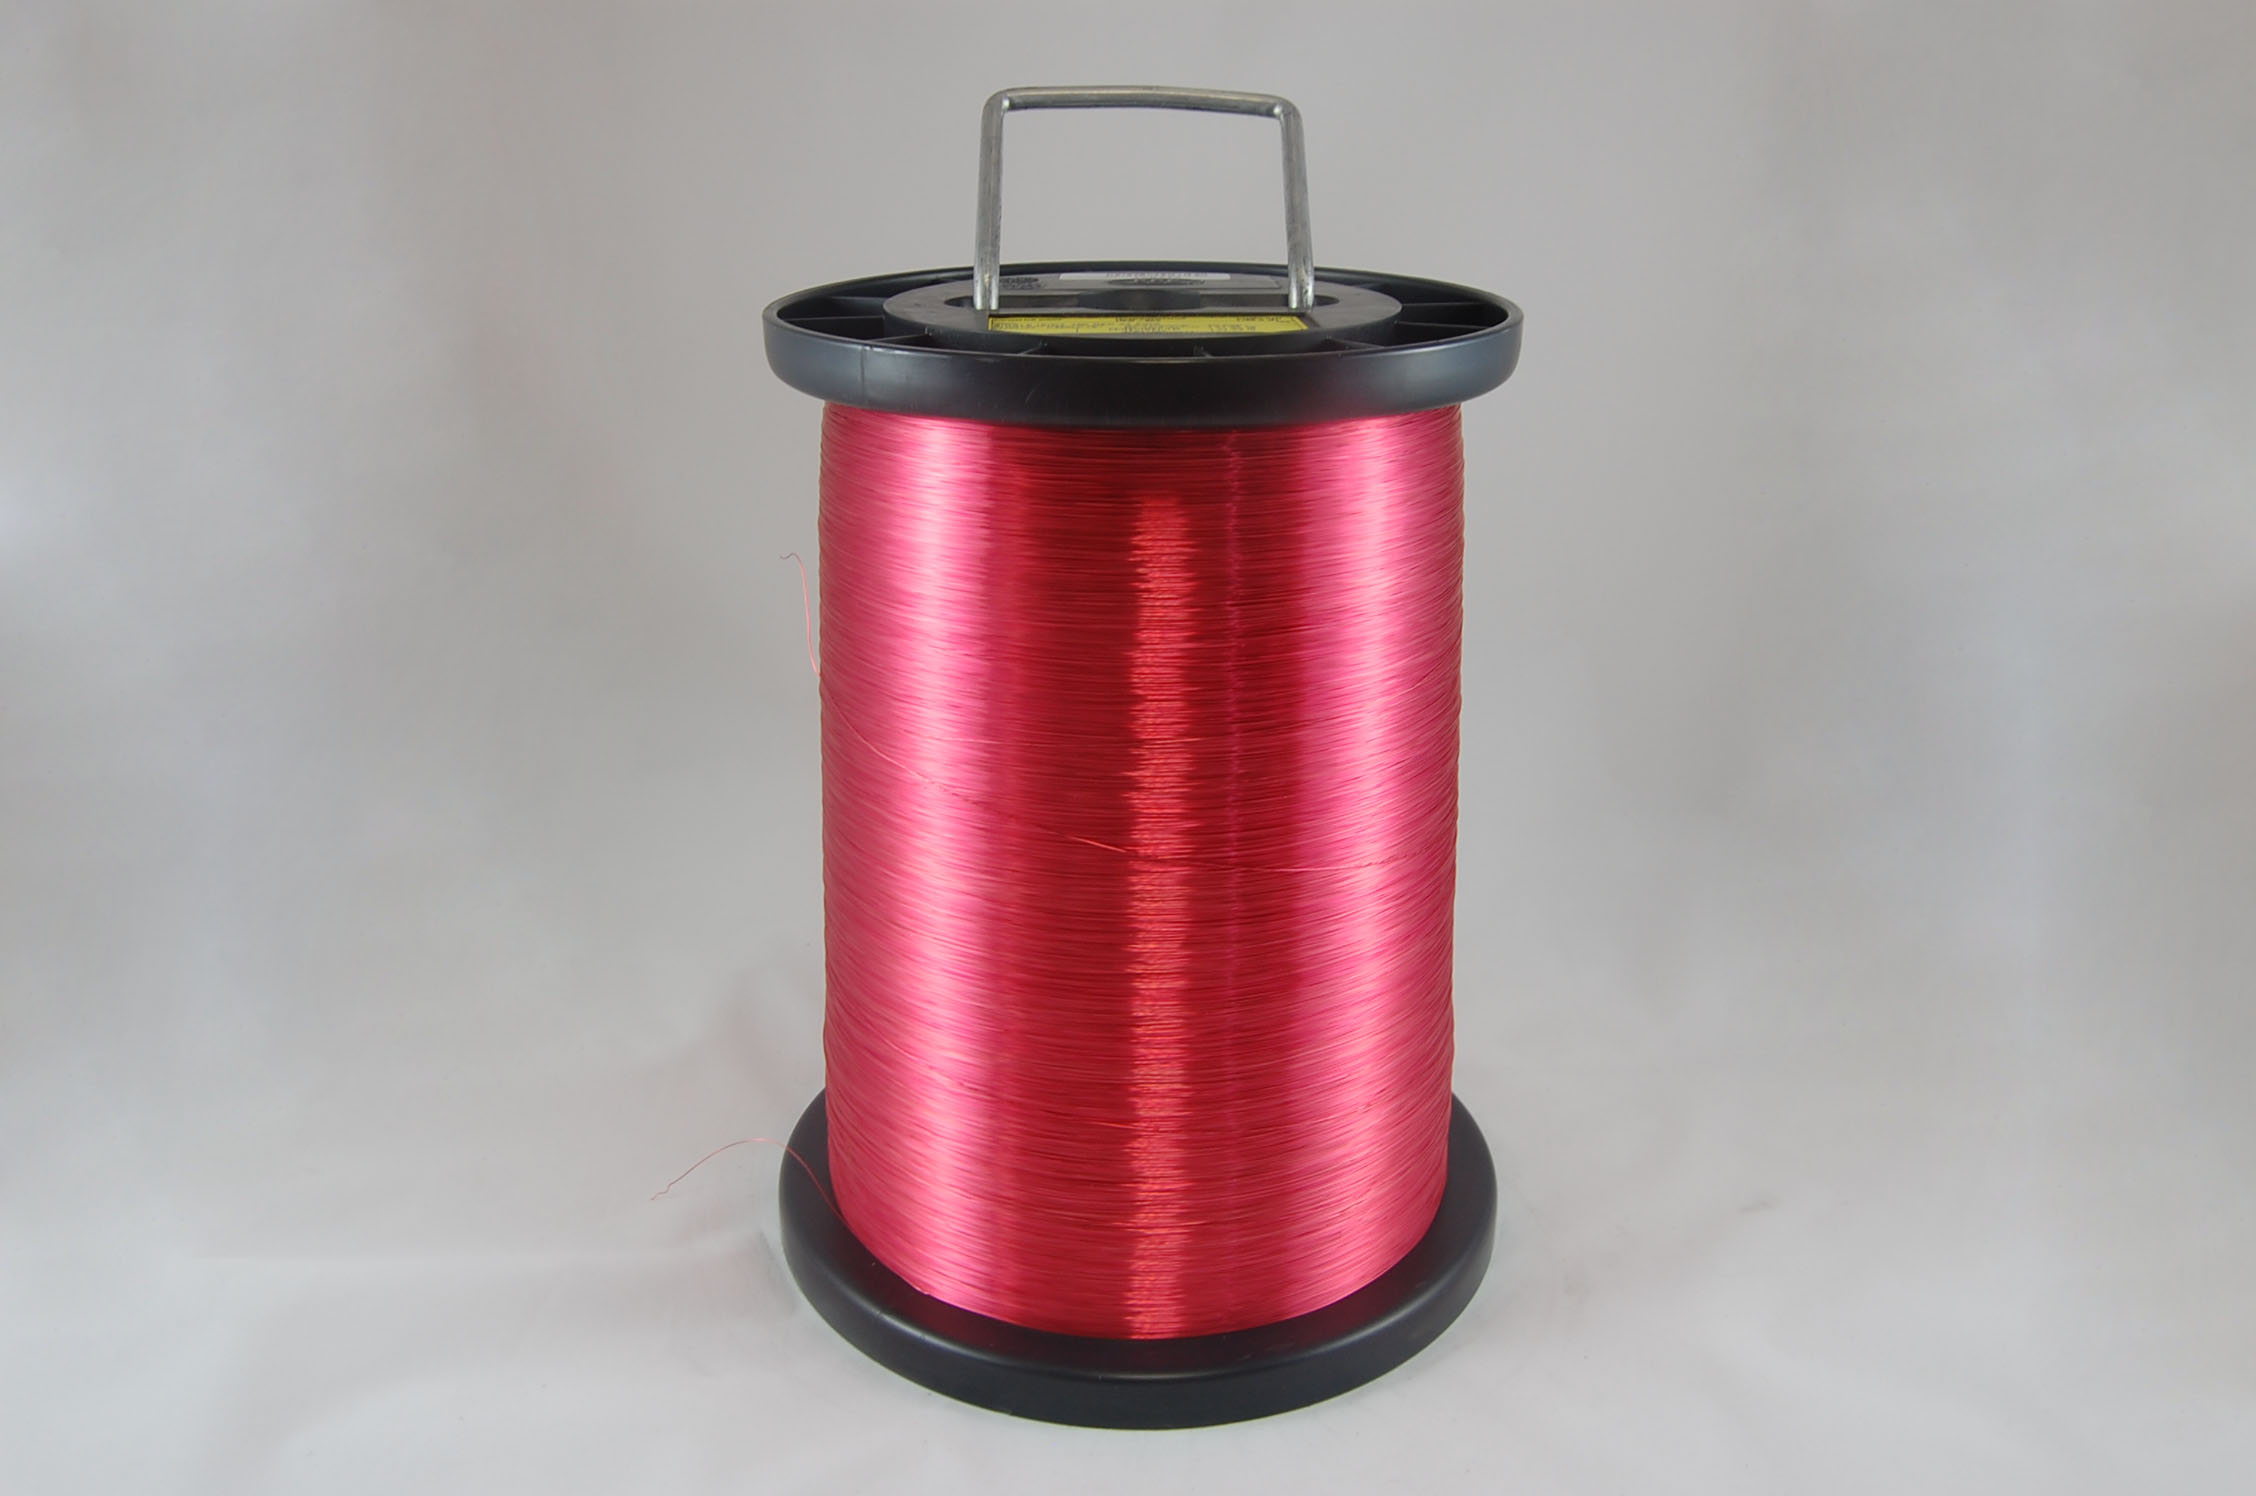 #15.5 Heavy INVEMID 200 Round MW 35 Copper Magnet Wire 200°C, copper, 45 LB half pack pail (average wght.)